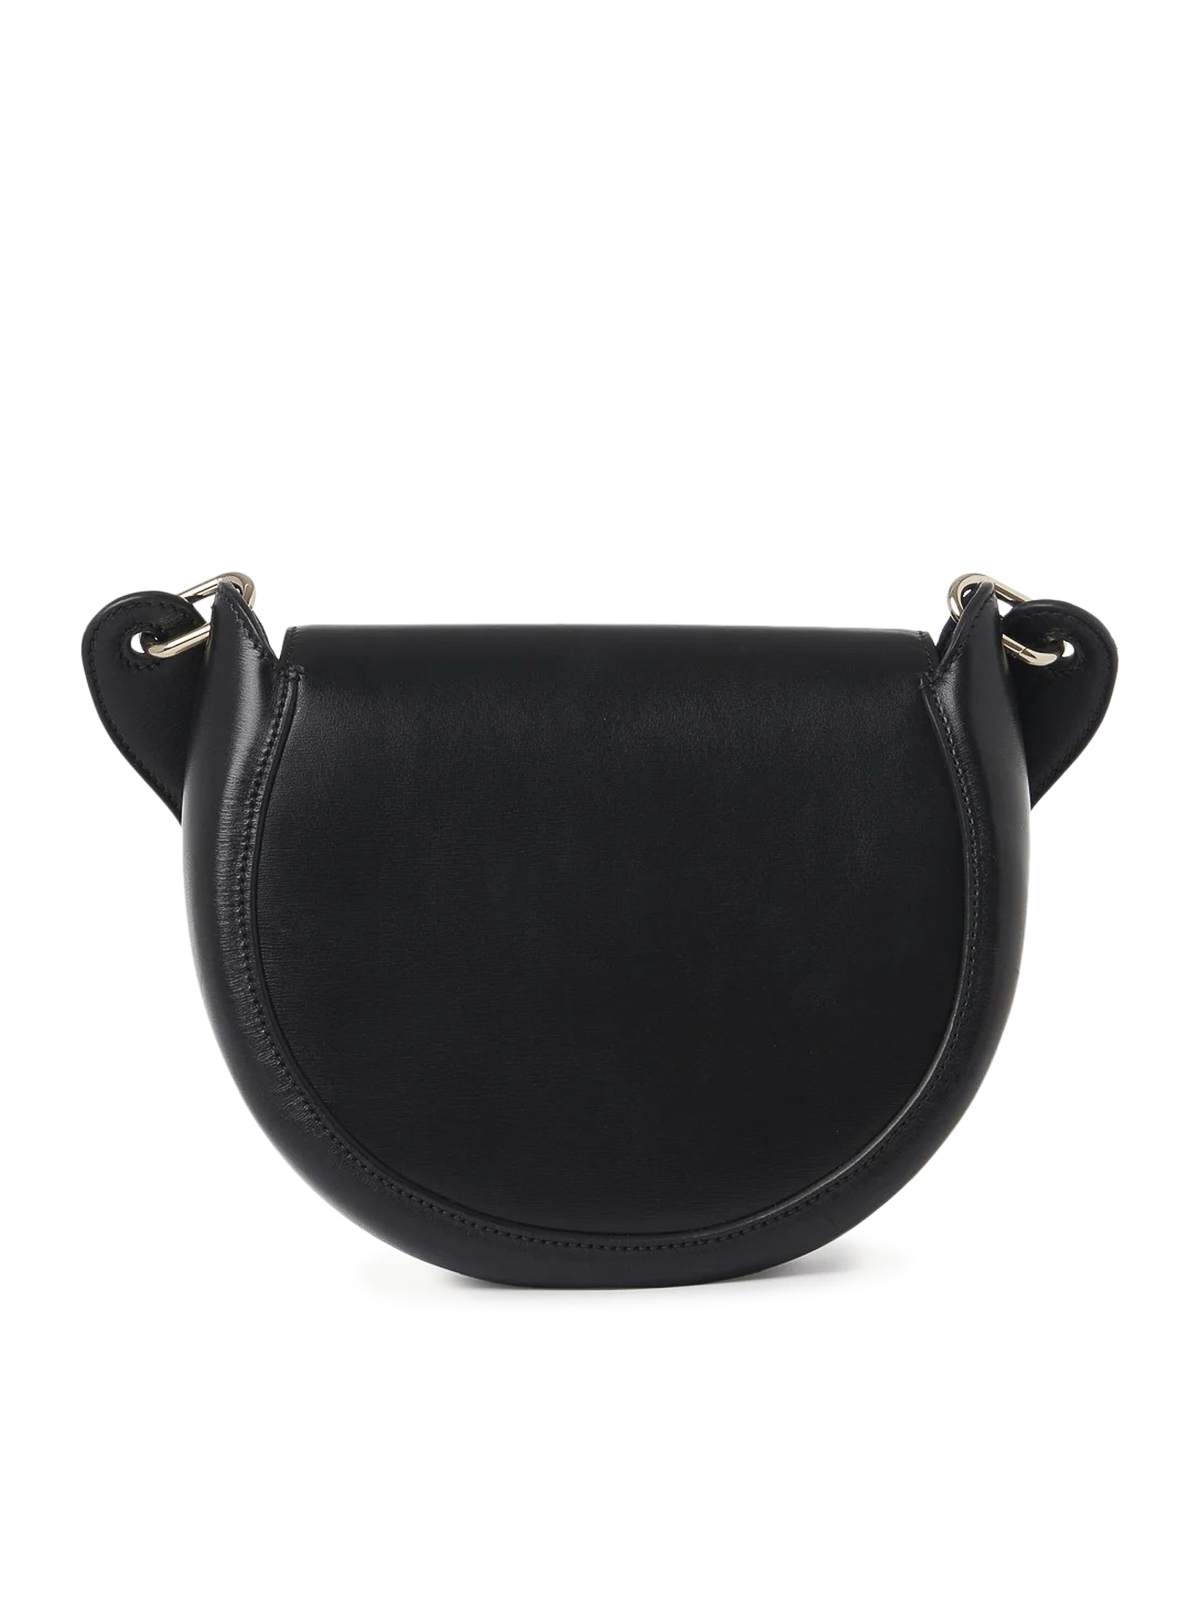 Shop Chloé Leather Bag In Black